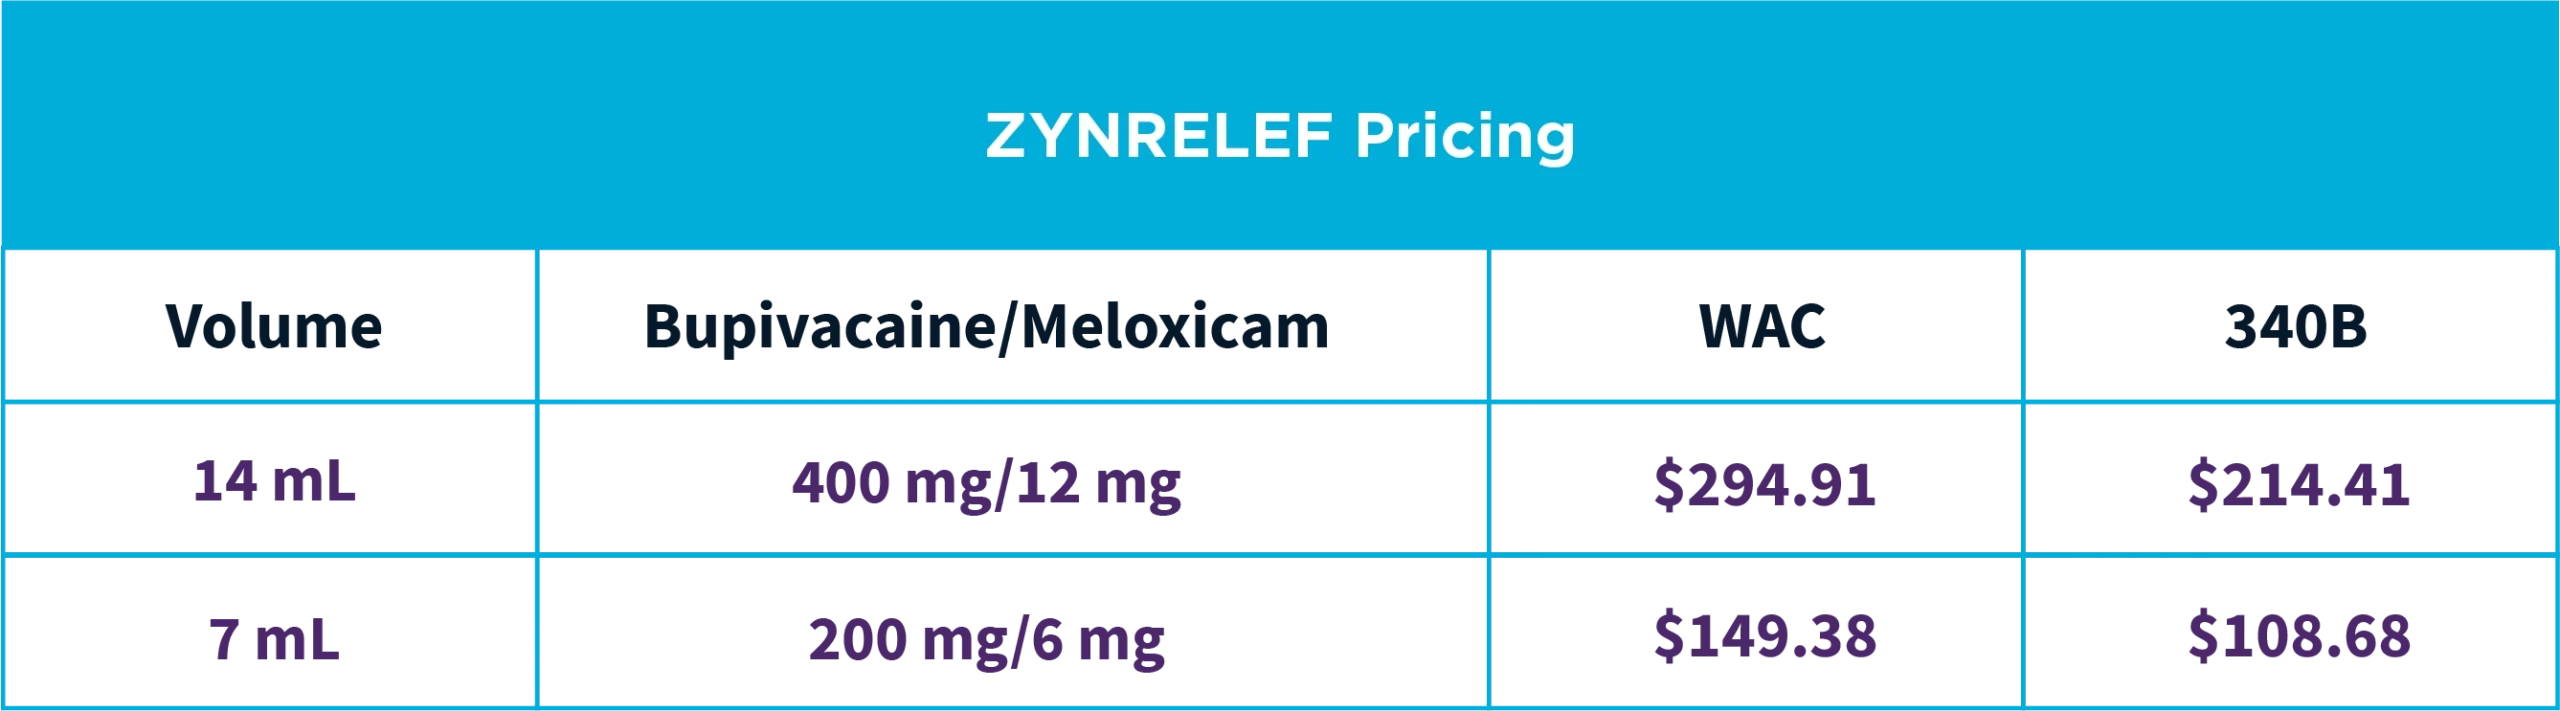 ZYNRELEF pricing table: 14-mL WAC = $294.91; 14-mL 340B = $214.41; 7-mL WAC = $149.38; 7-mL 340B = $108.68.